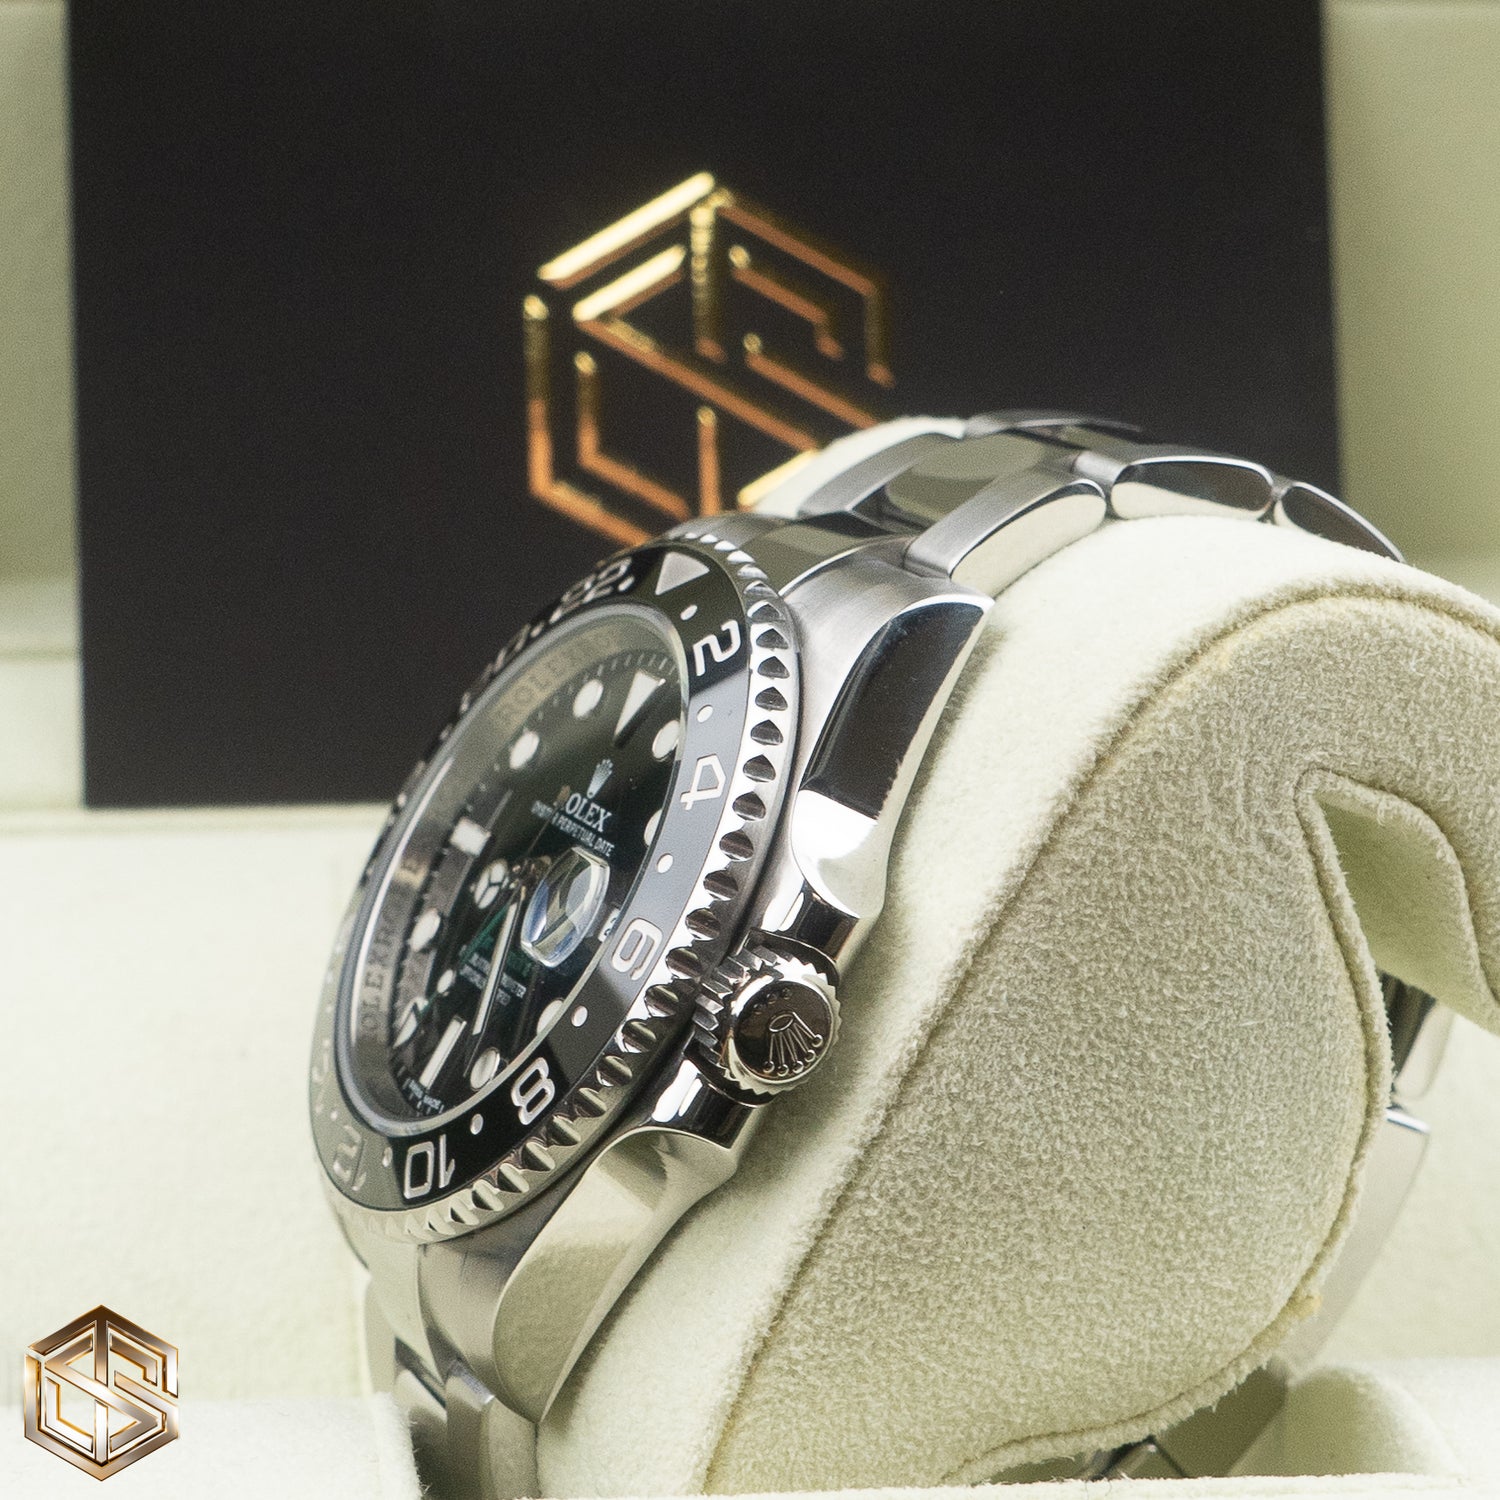 Rolex 116710LN GMT-Master II Black Dial 2015 Full Set Watch